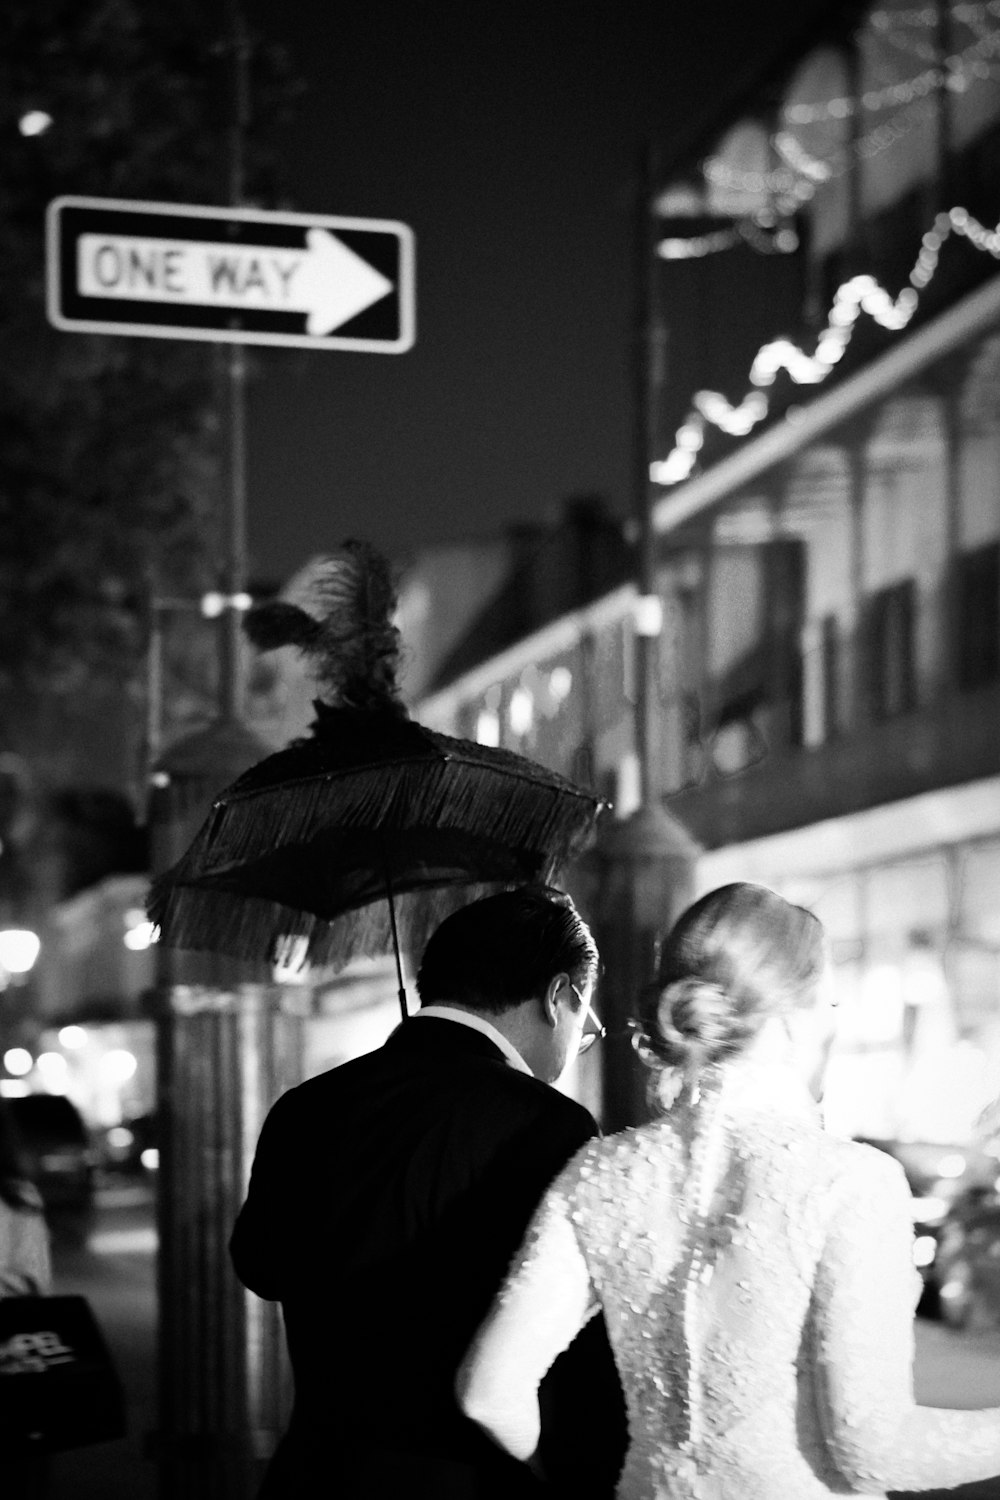 a man and woman walking down a street holding an umbrella